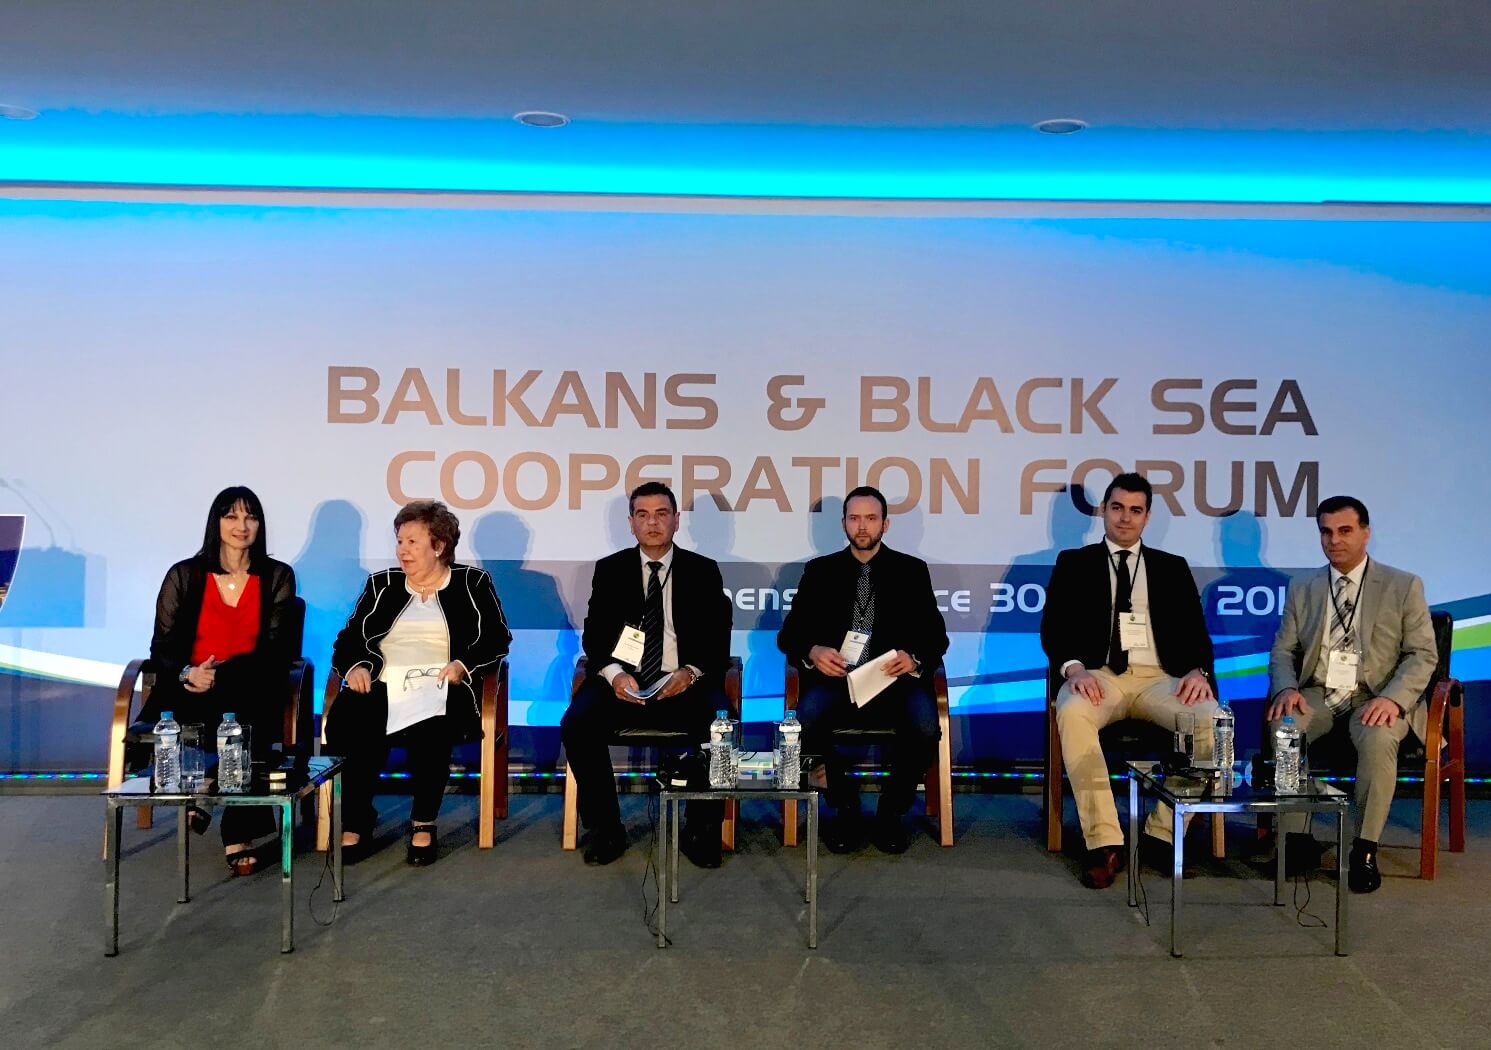 Balkans&Black Sea Cooperation Forum